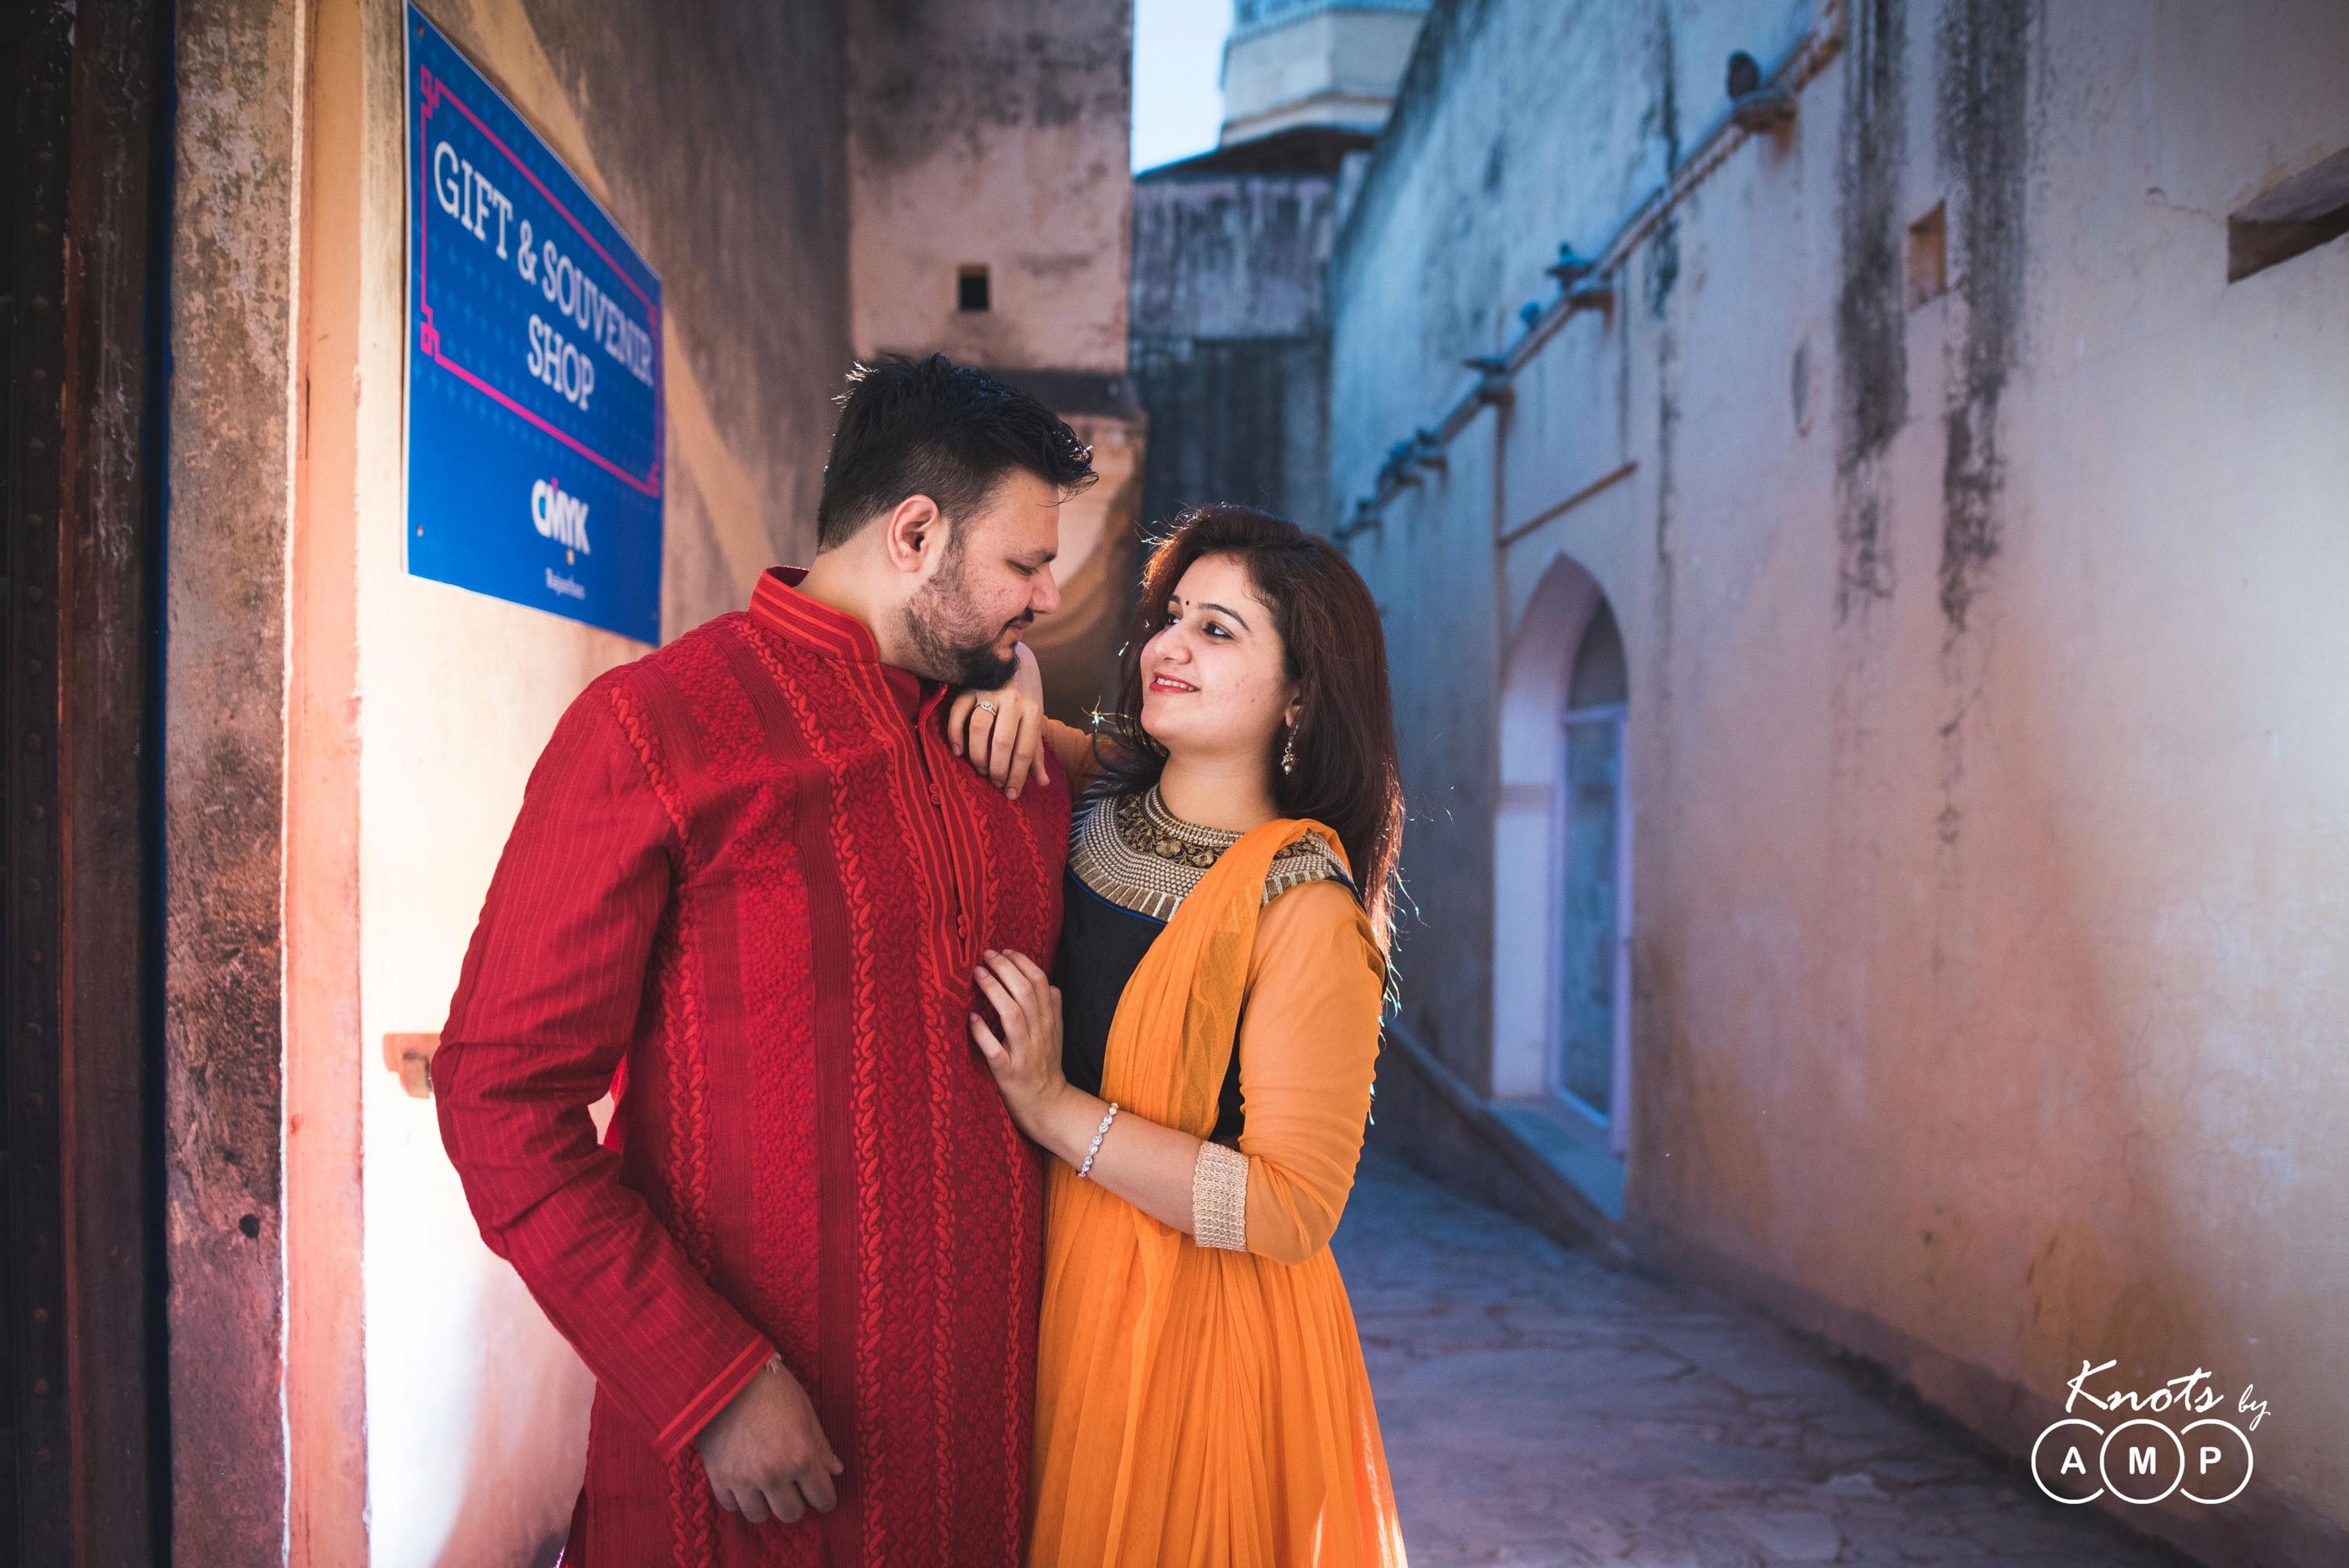 Couple Shoot In Jaipur Best Wedding Photographers In India Knotsbyamp 3098